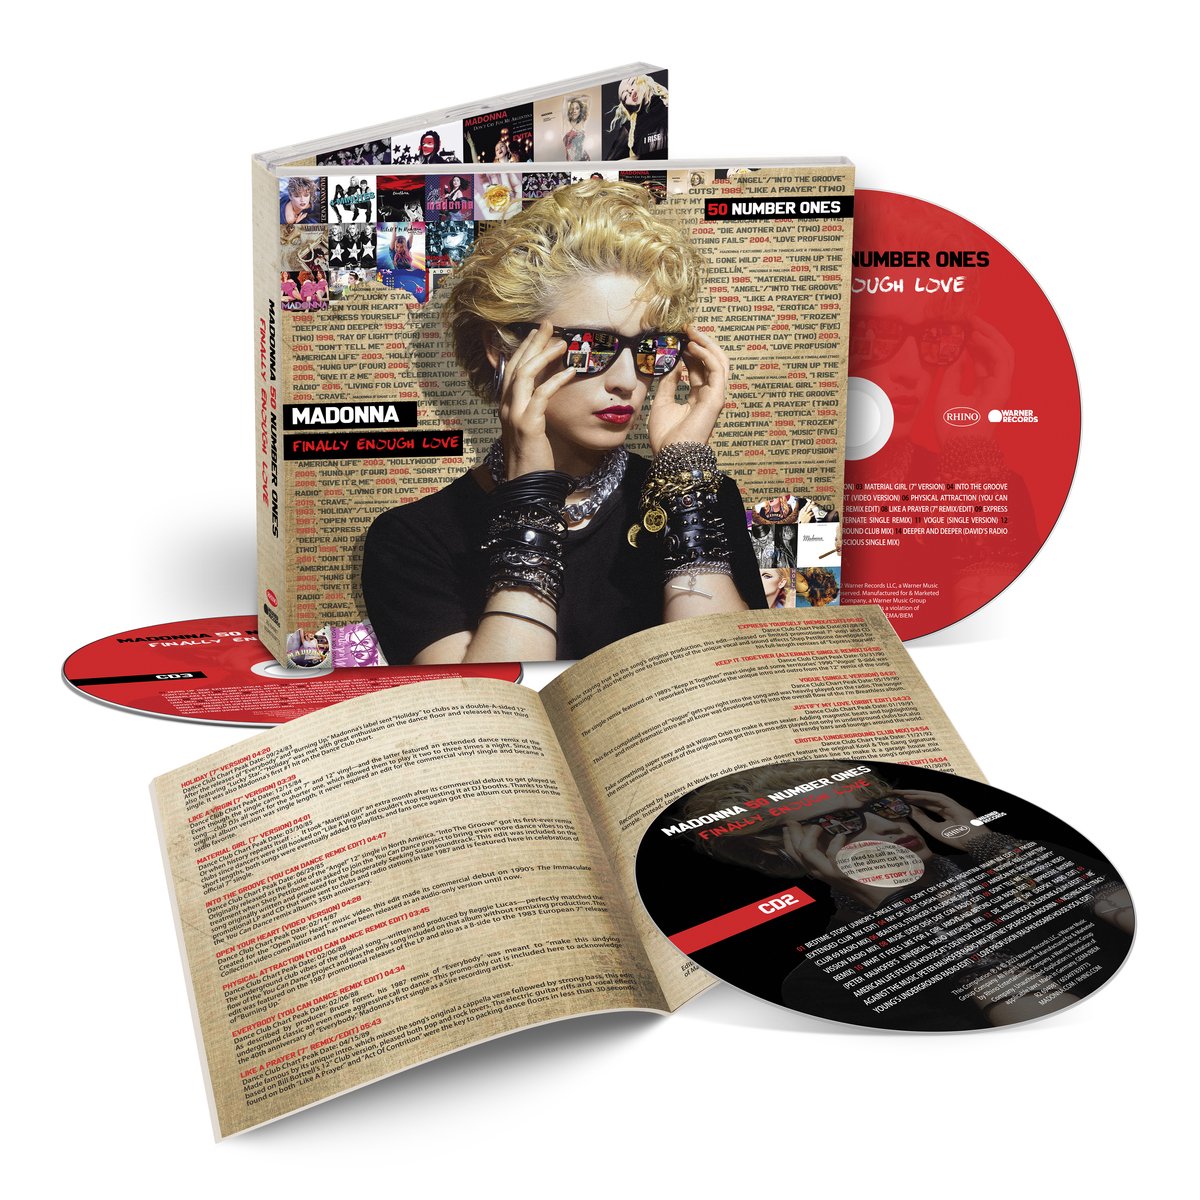 Finally Enough Love (3CD) - Madonna